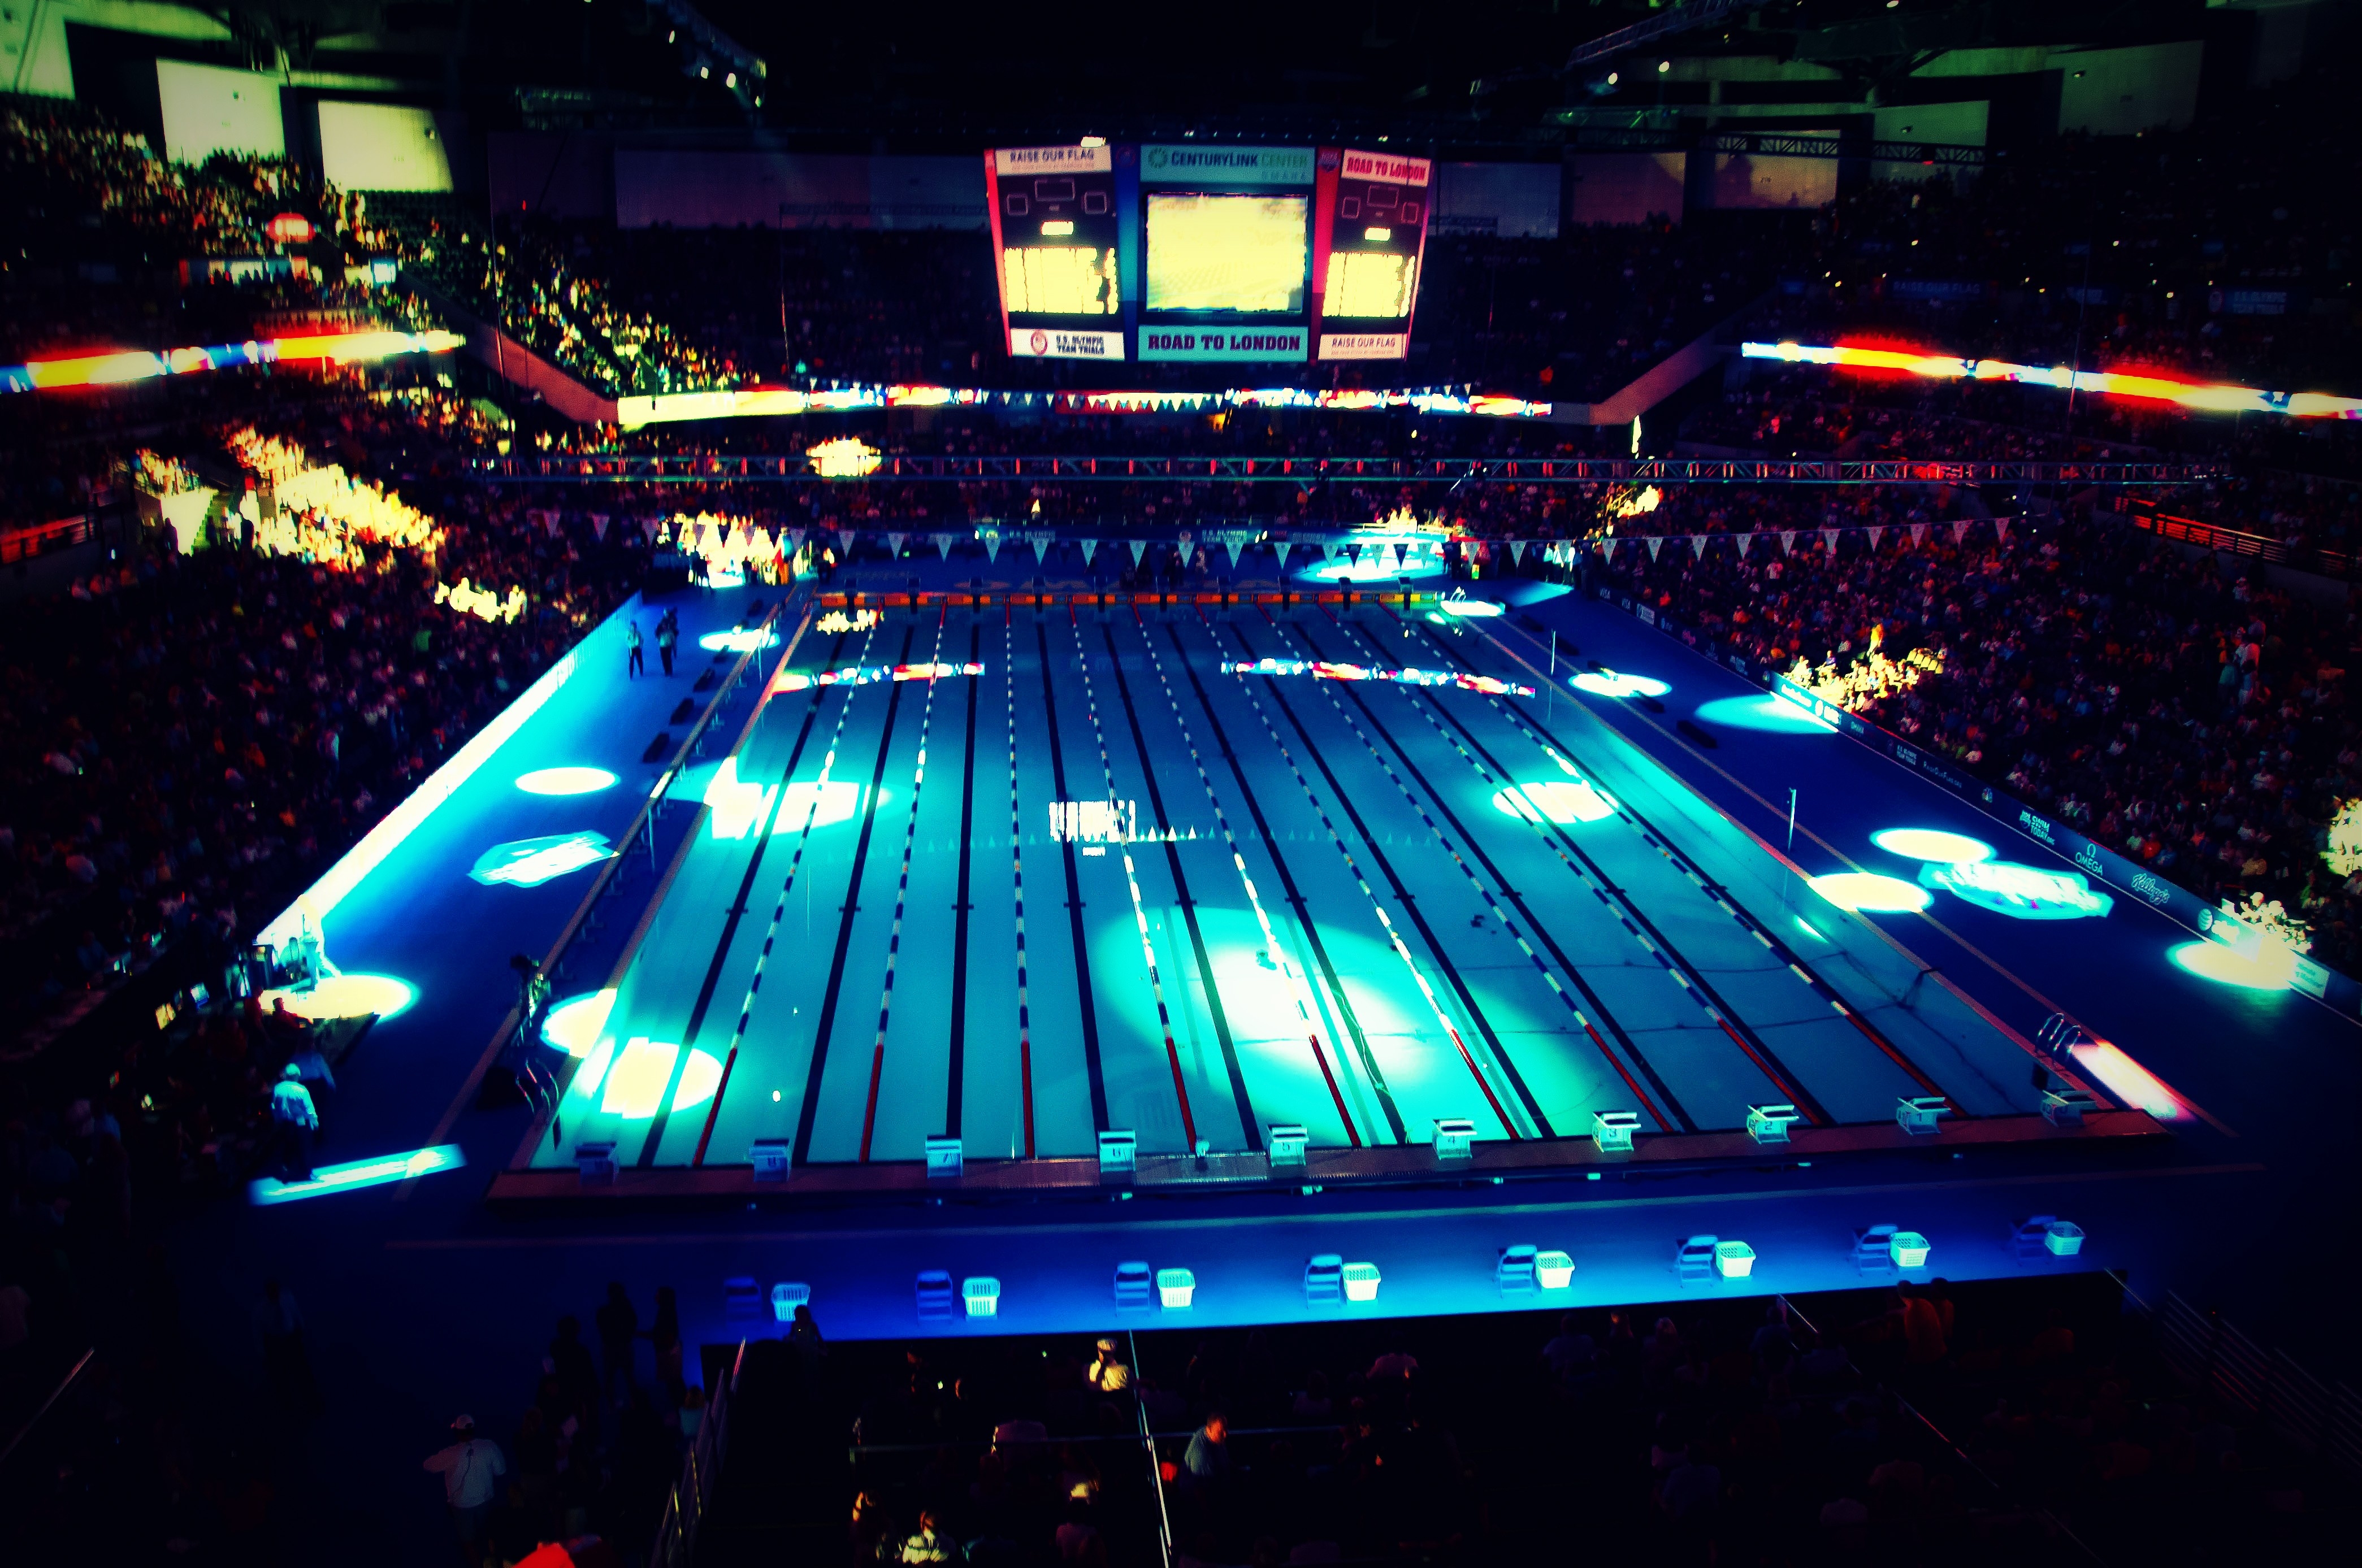 swimming pools olympics 2012 4179x2775 wallpaper High Quality Wallpaper, High Definition Wallpaper